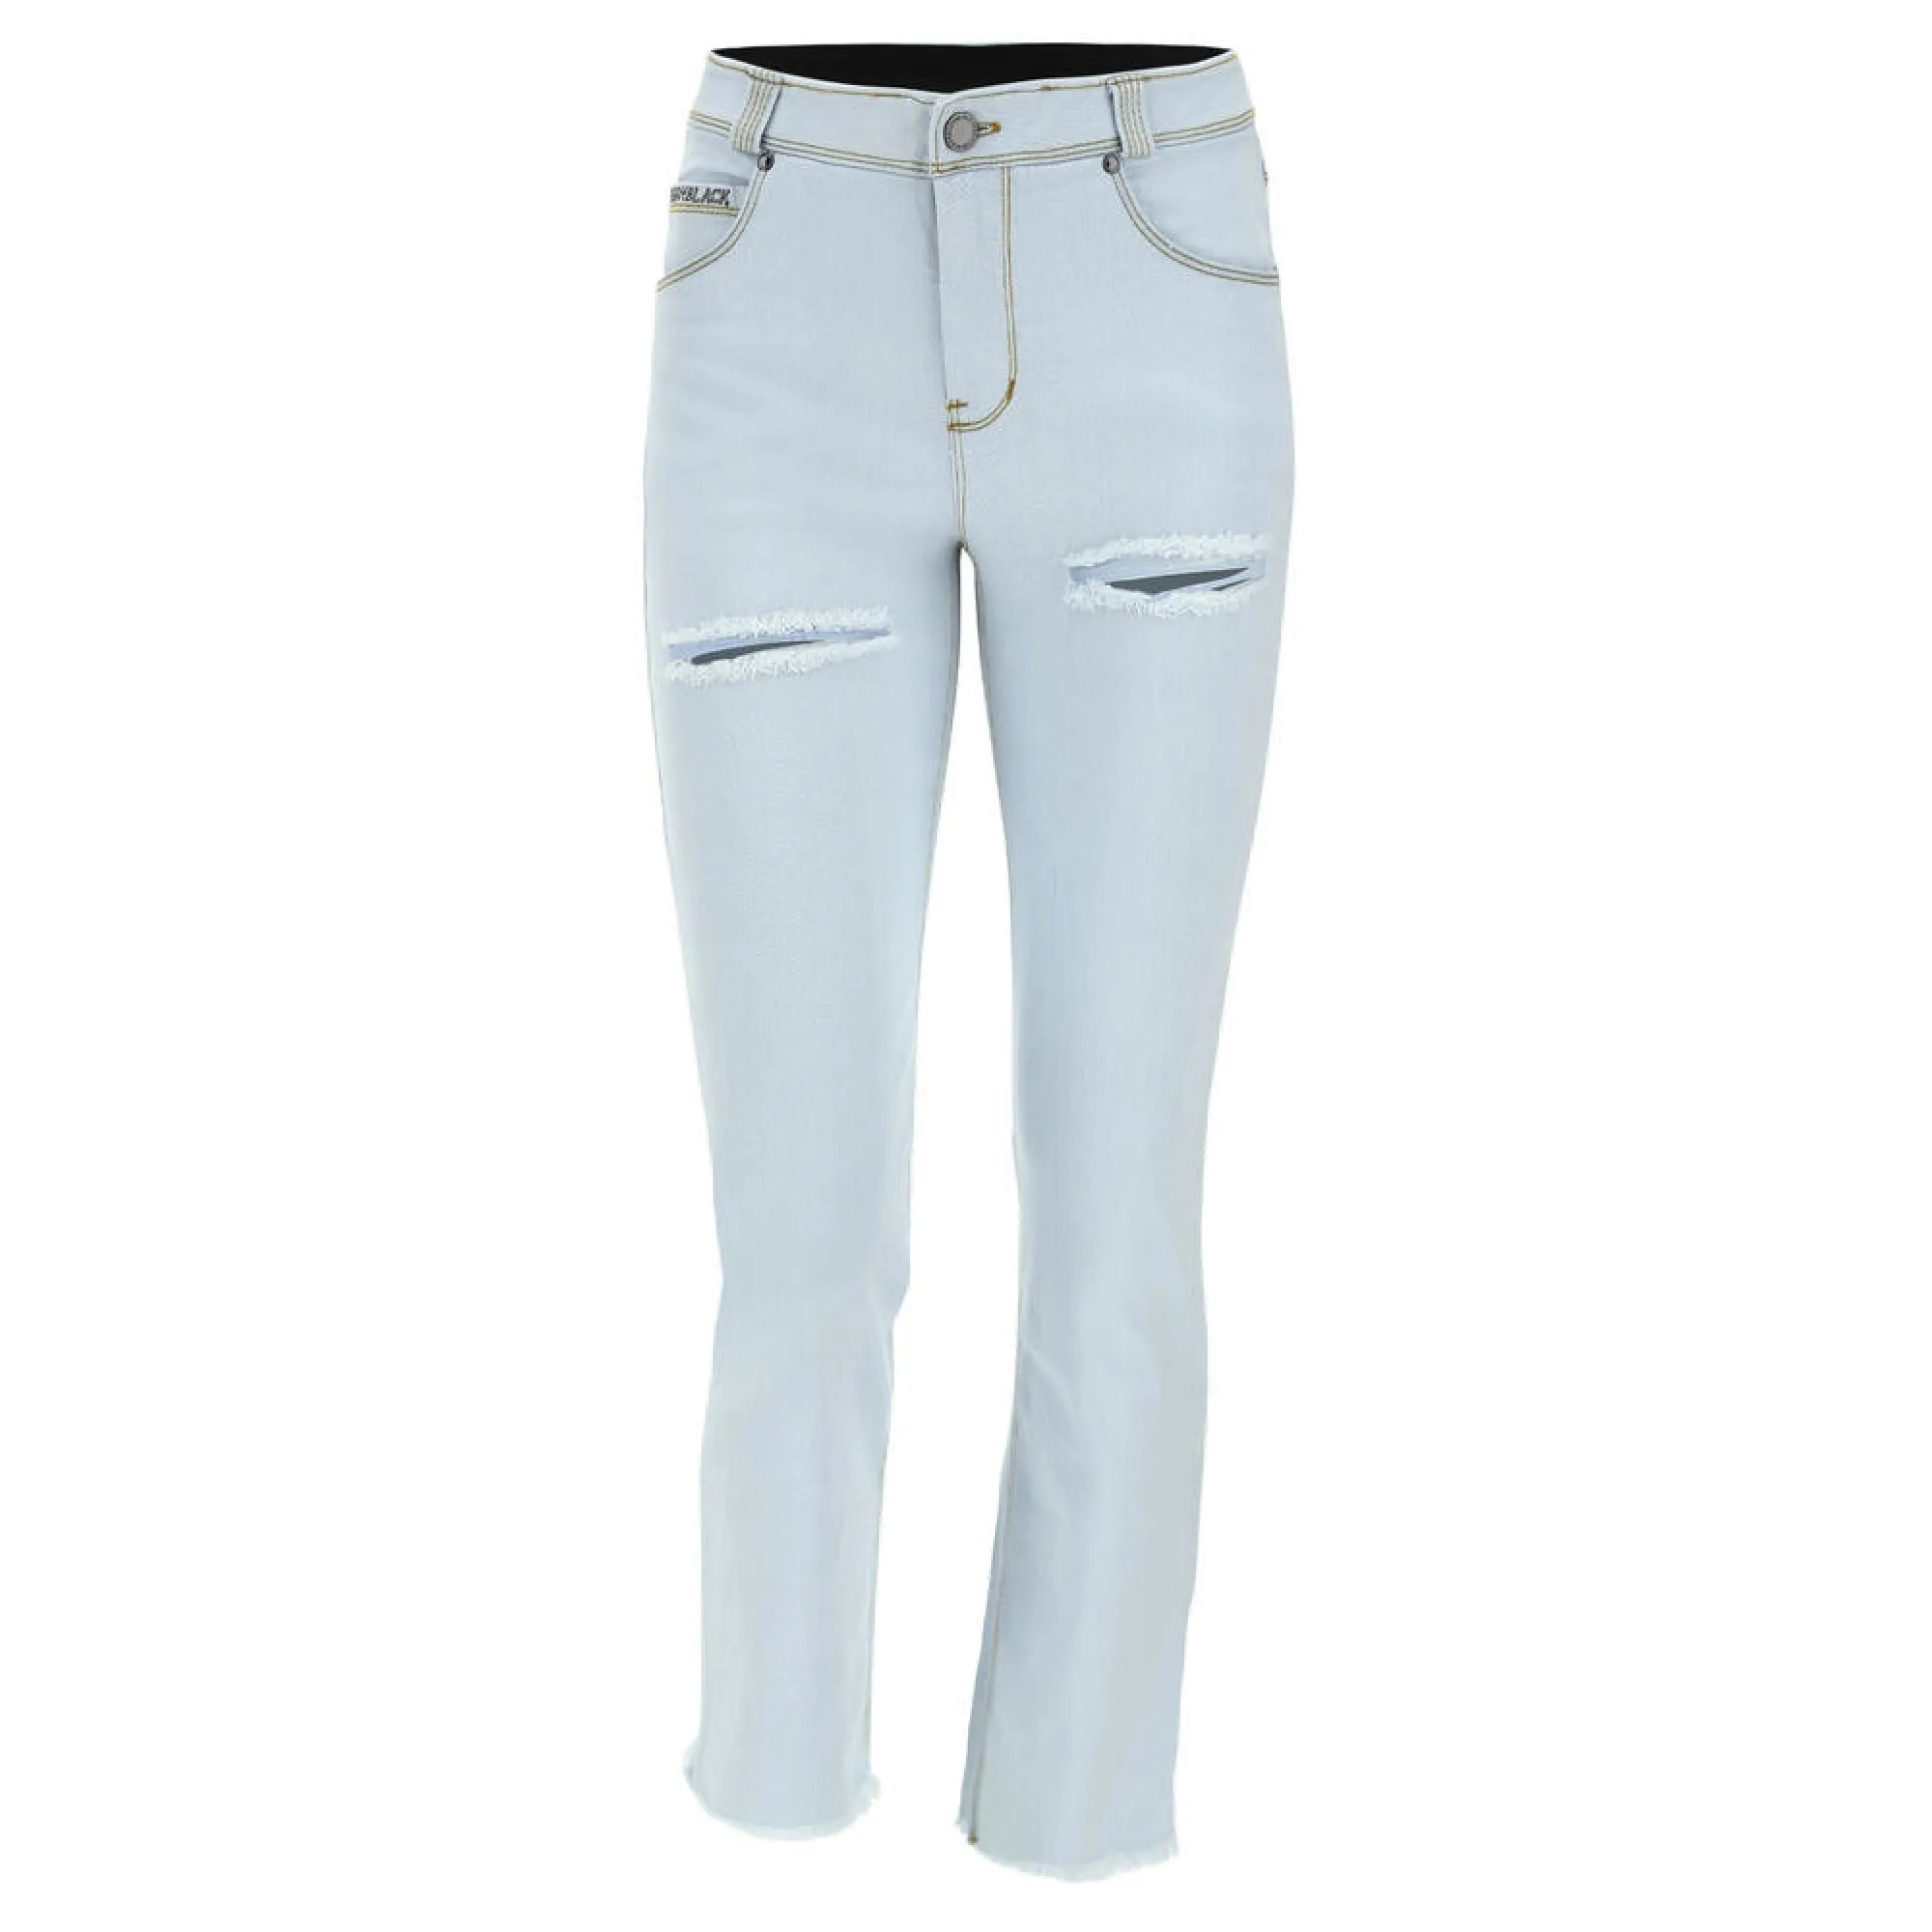 Freddy Fit Jeans - Regular Waist Wide Leg Bottom Cropped - Super White Denim - Yellow Seam - J85Y